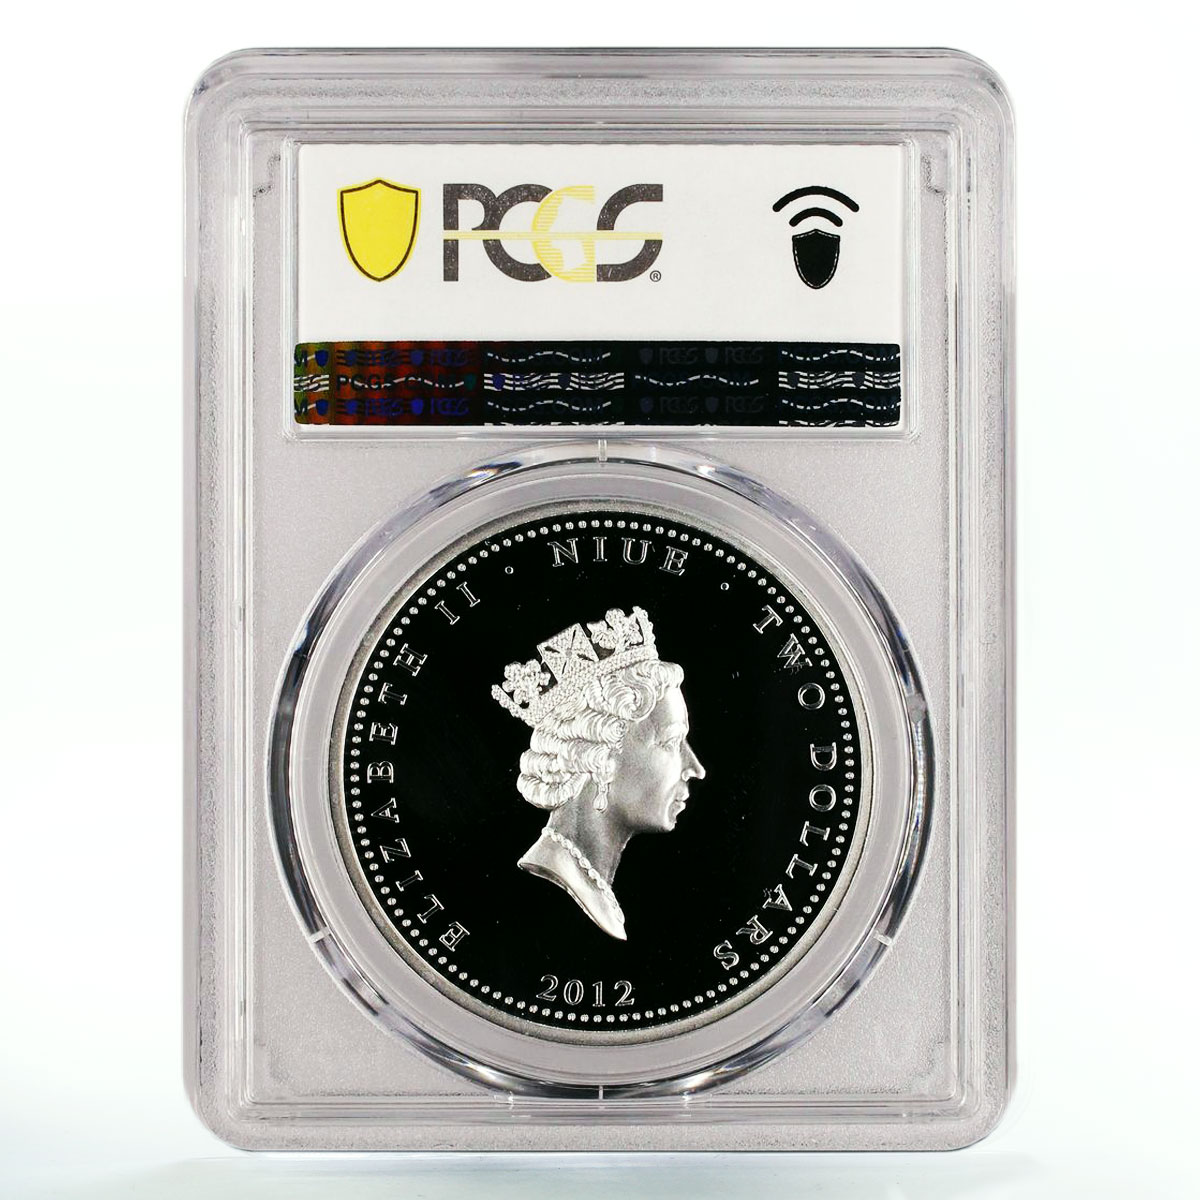 Niue 2 dollars Golden Age Poets Alexander Pushkin PR70 PCGS silver coin 2012